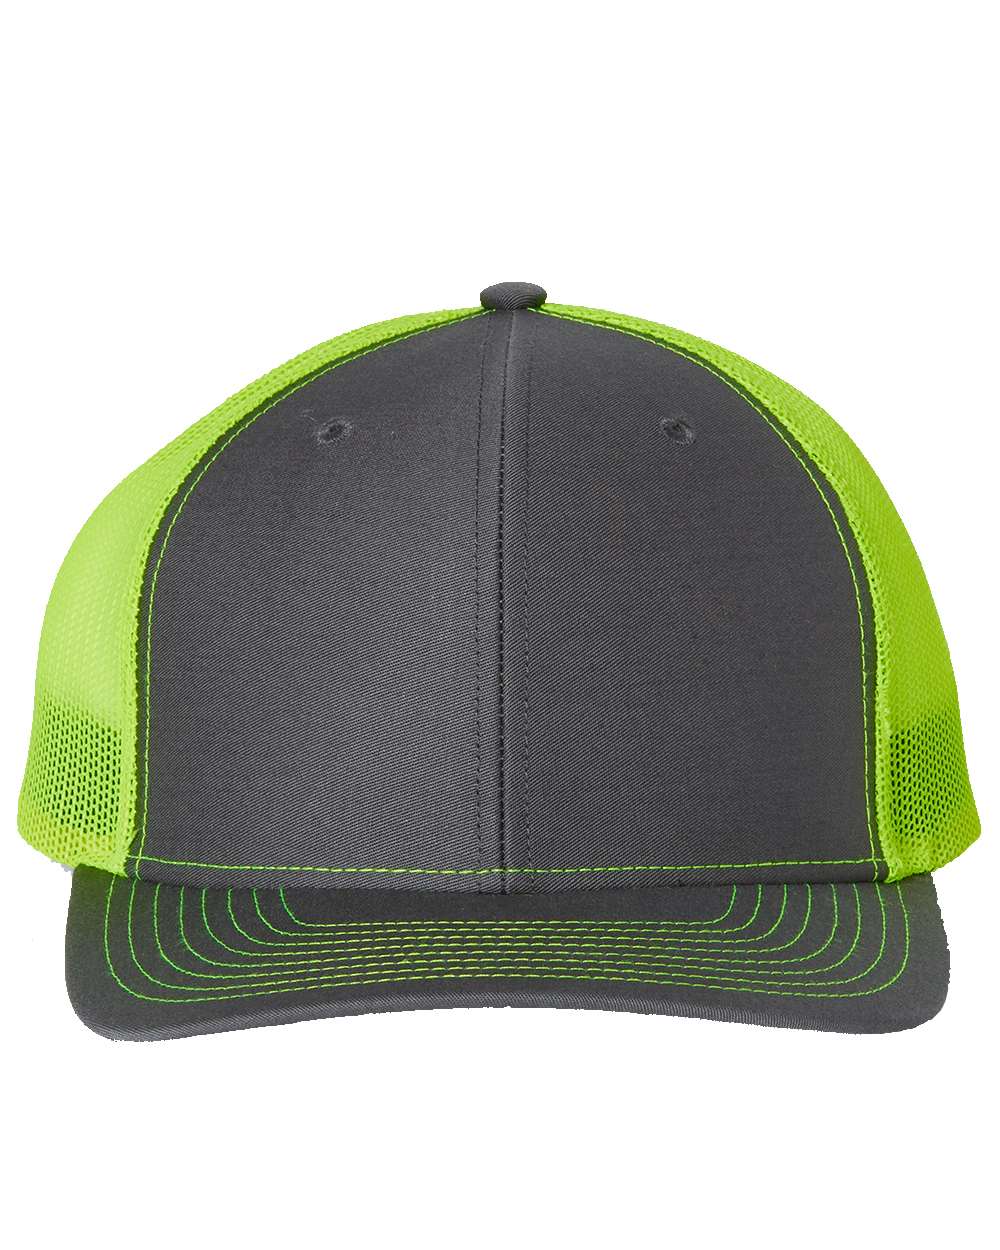 Richardson Snapback Trucker Hat (112) in Charcoal/Neon Yellow